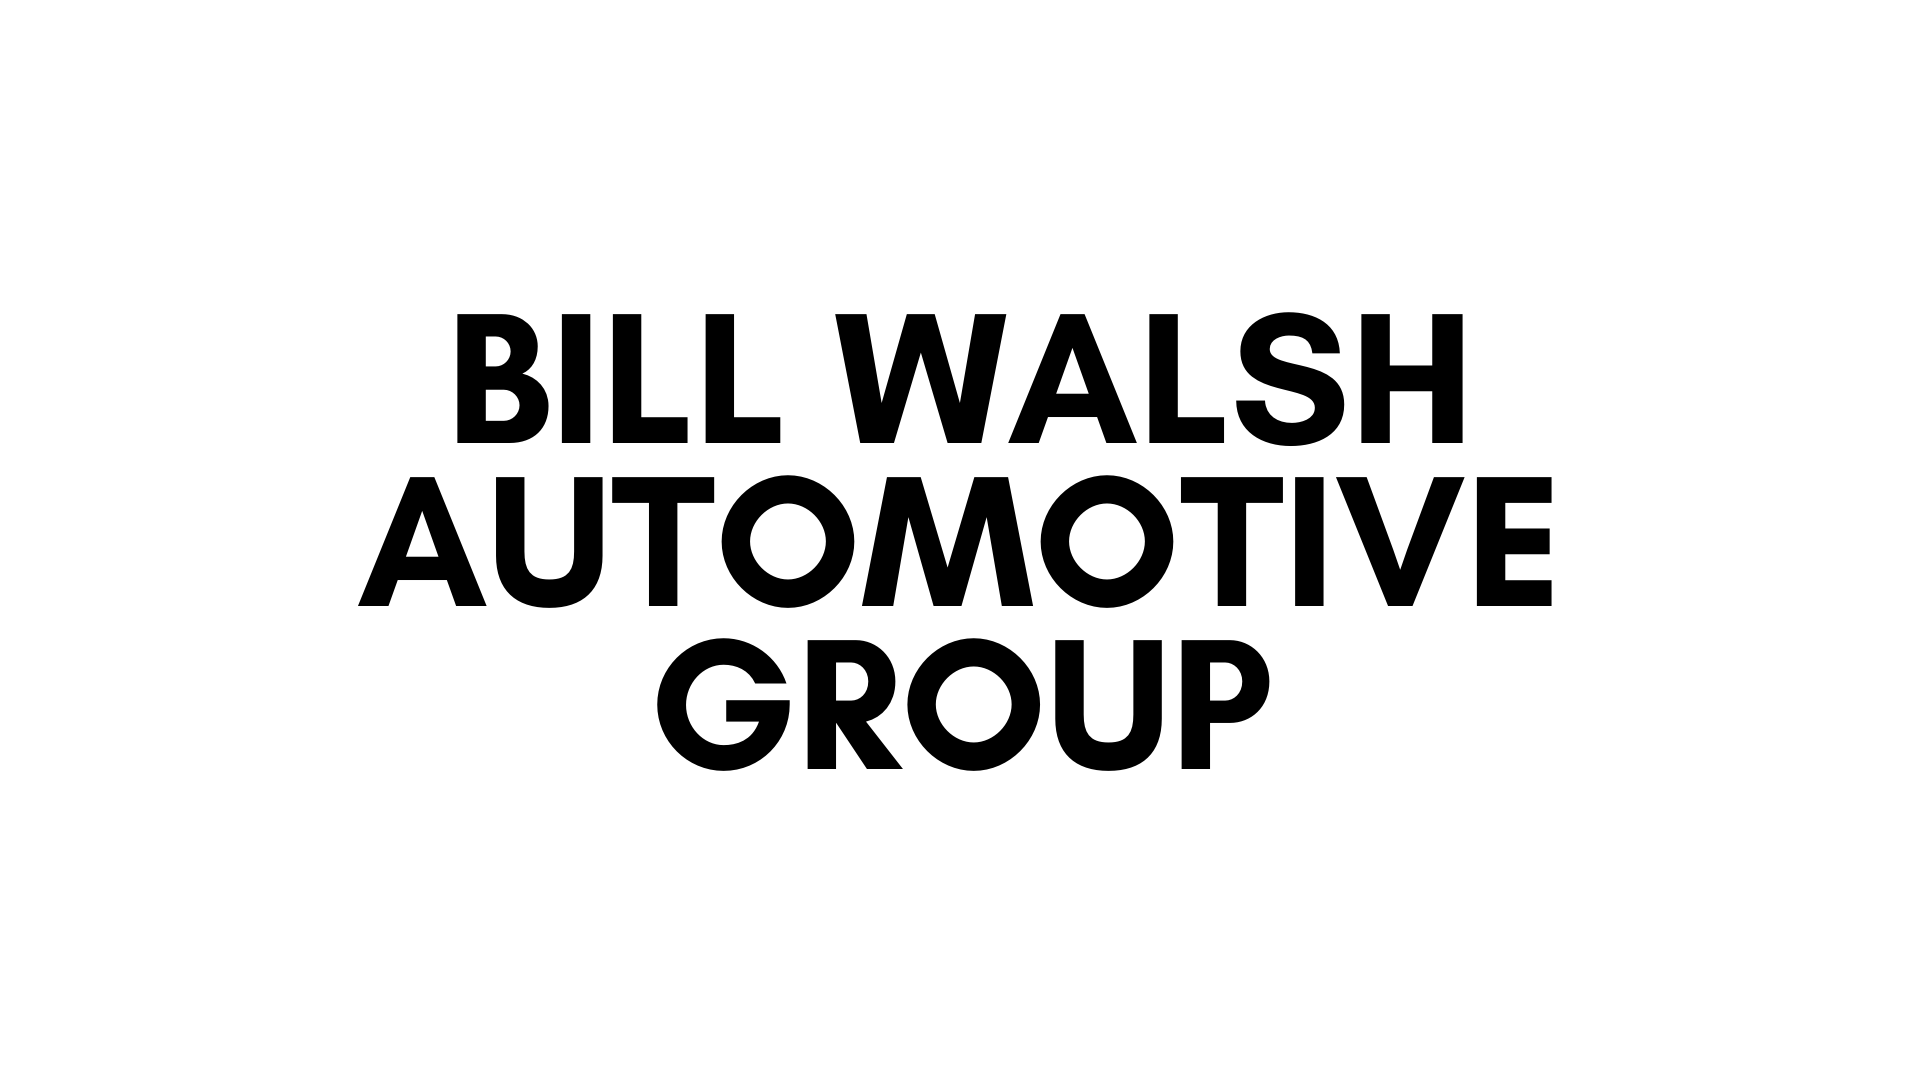 BILL WALSH AUTOMOTIVE GROUP